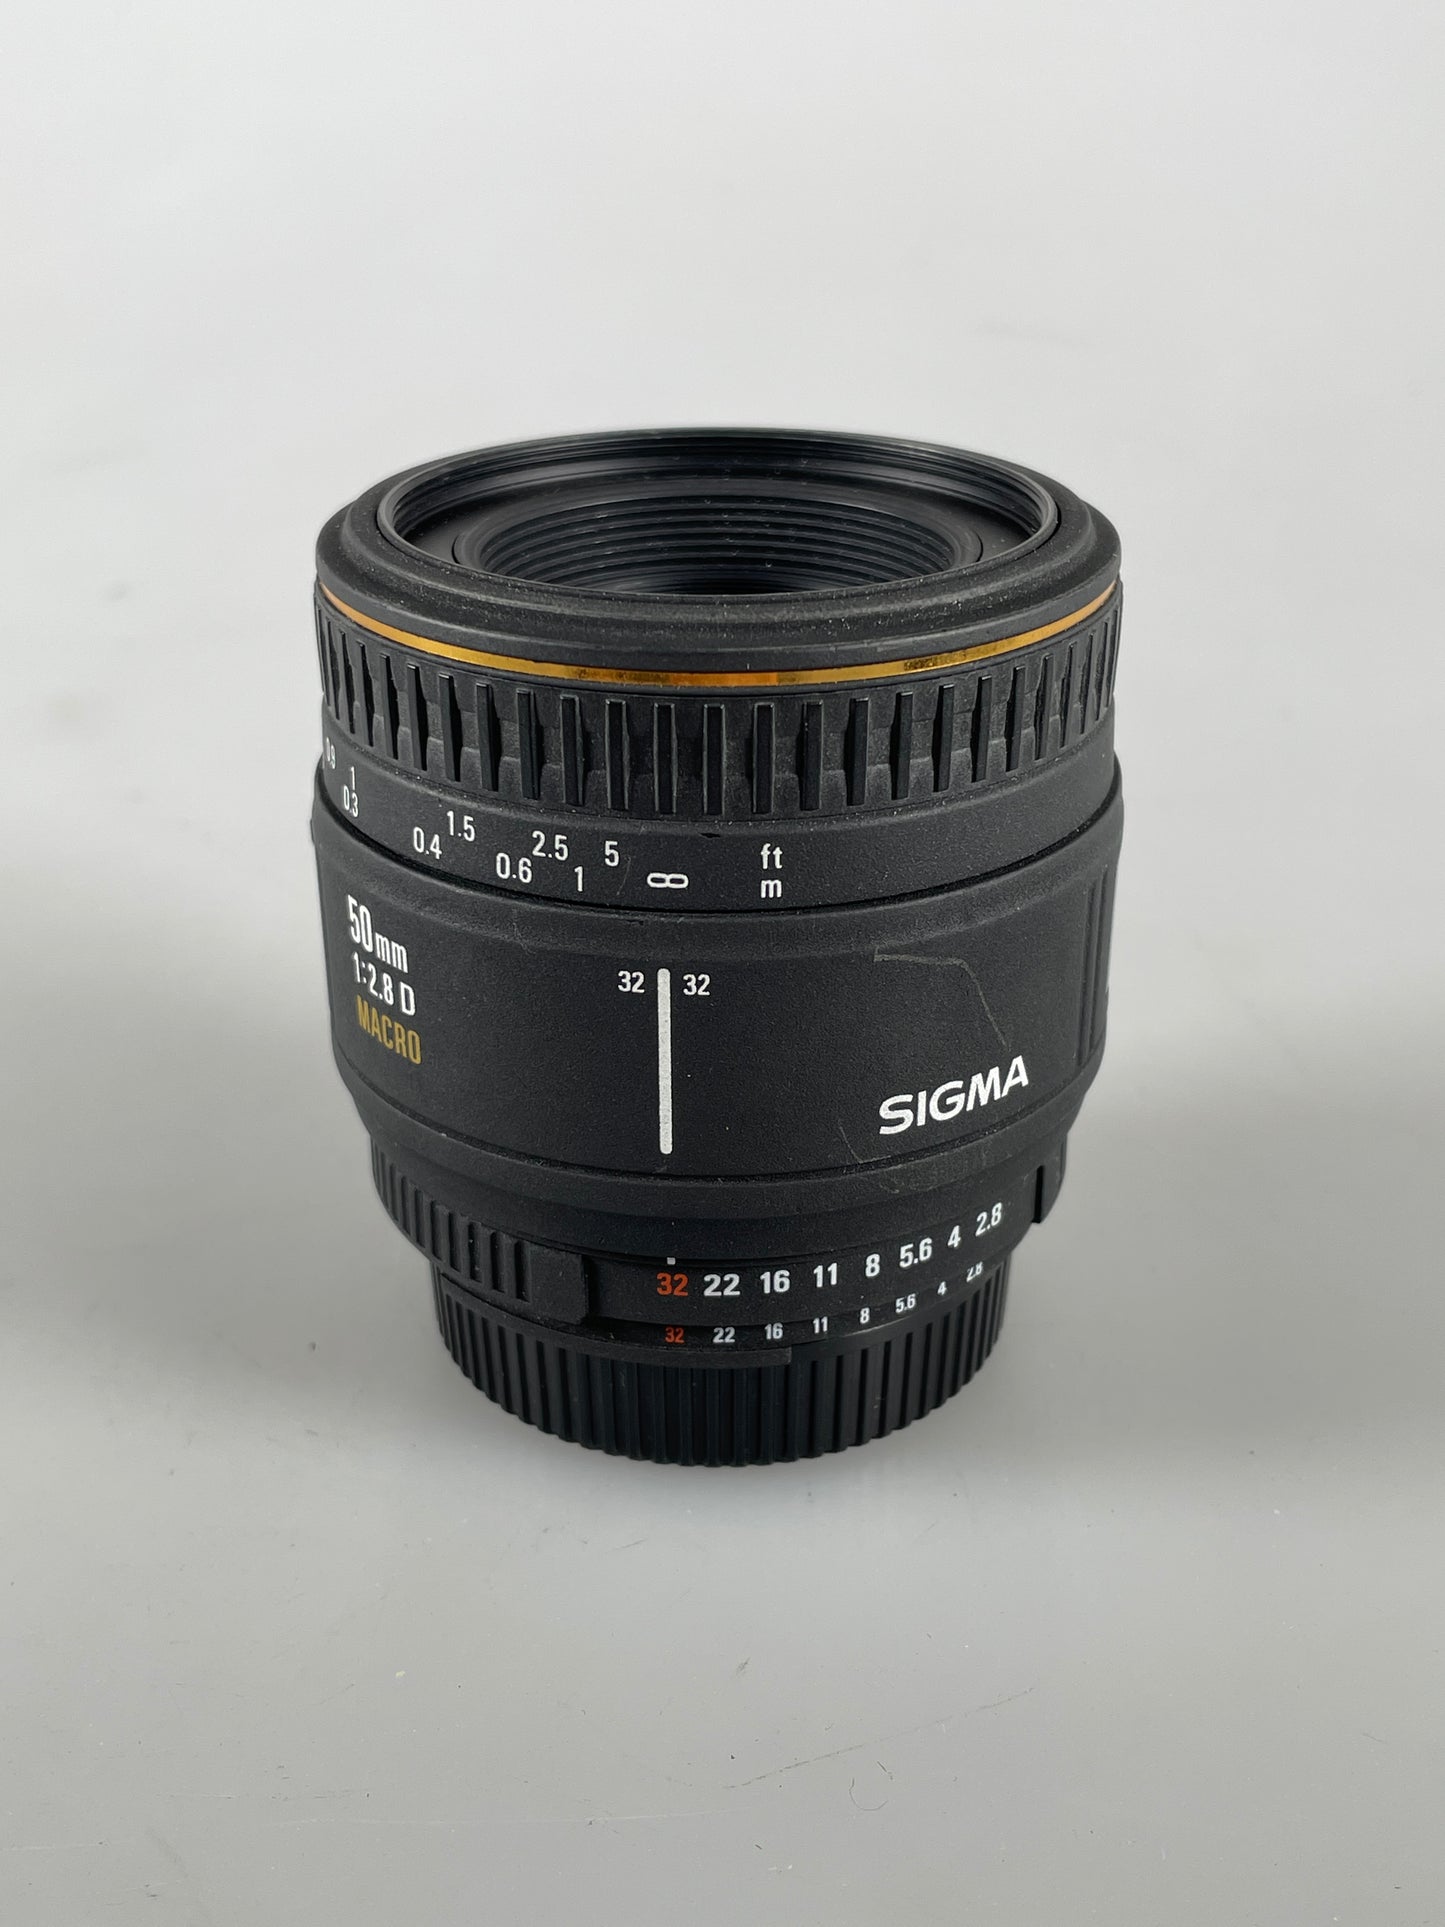 Sigma DG EX 50mm f2.8 D Macro for Nikon F mount AF Lens 1:1 MACRO